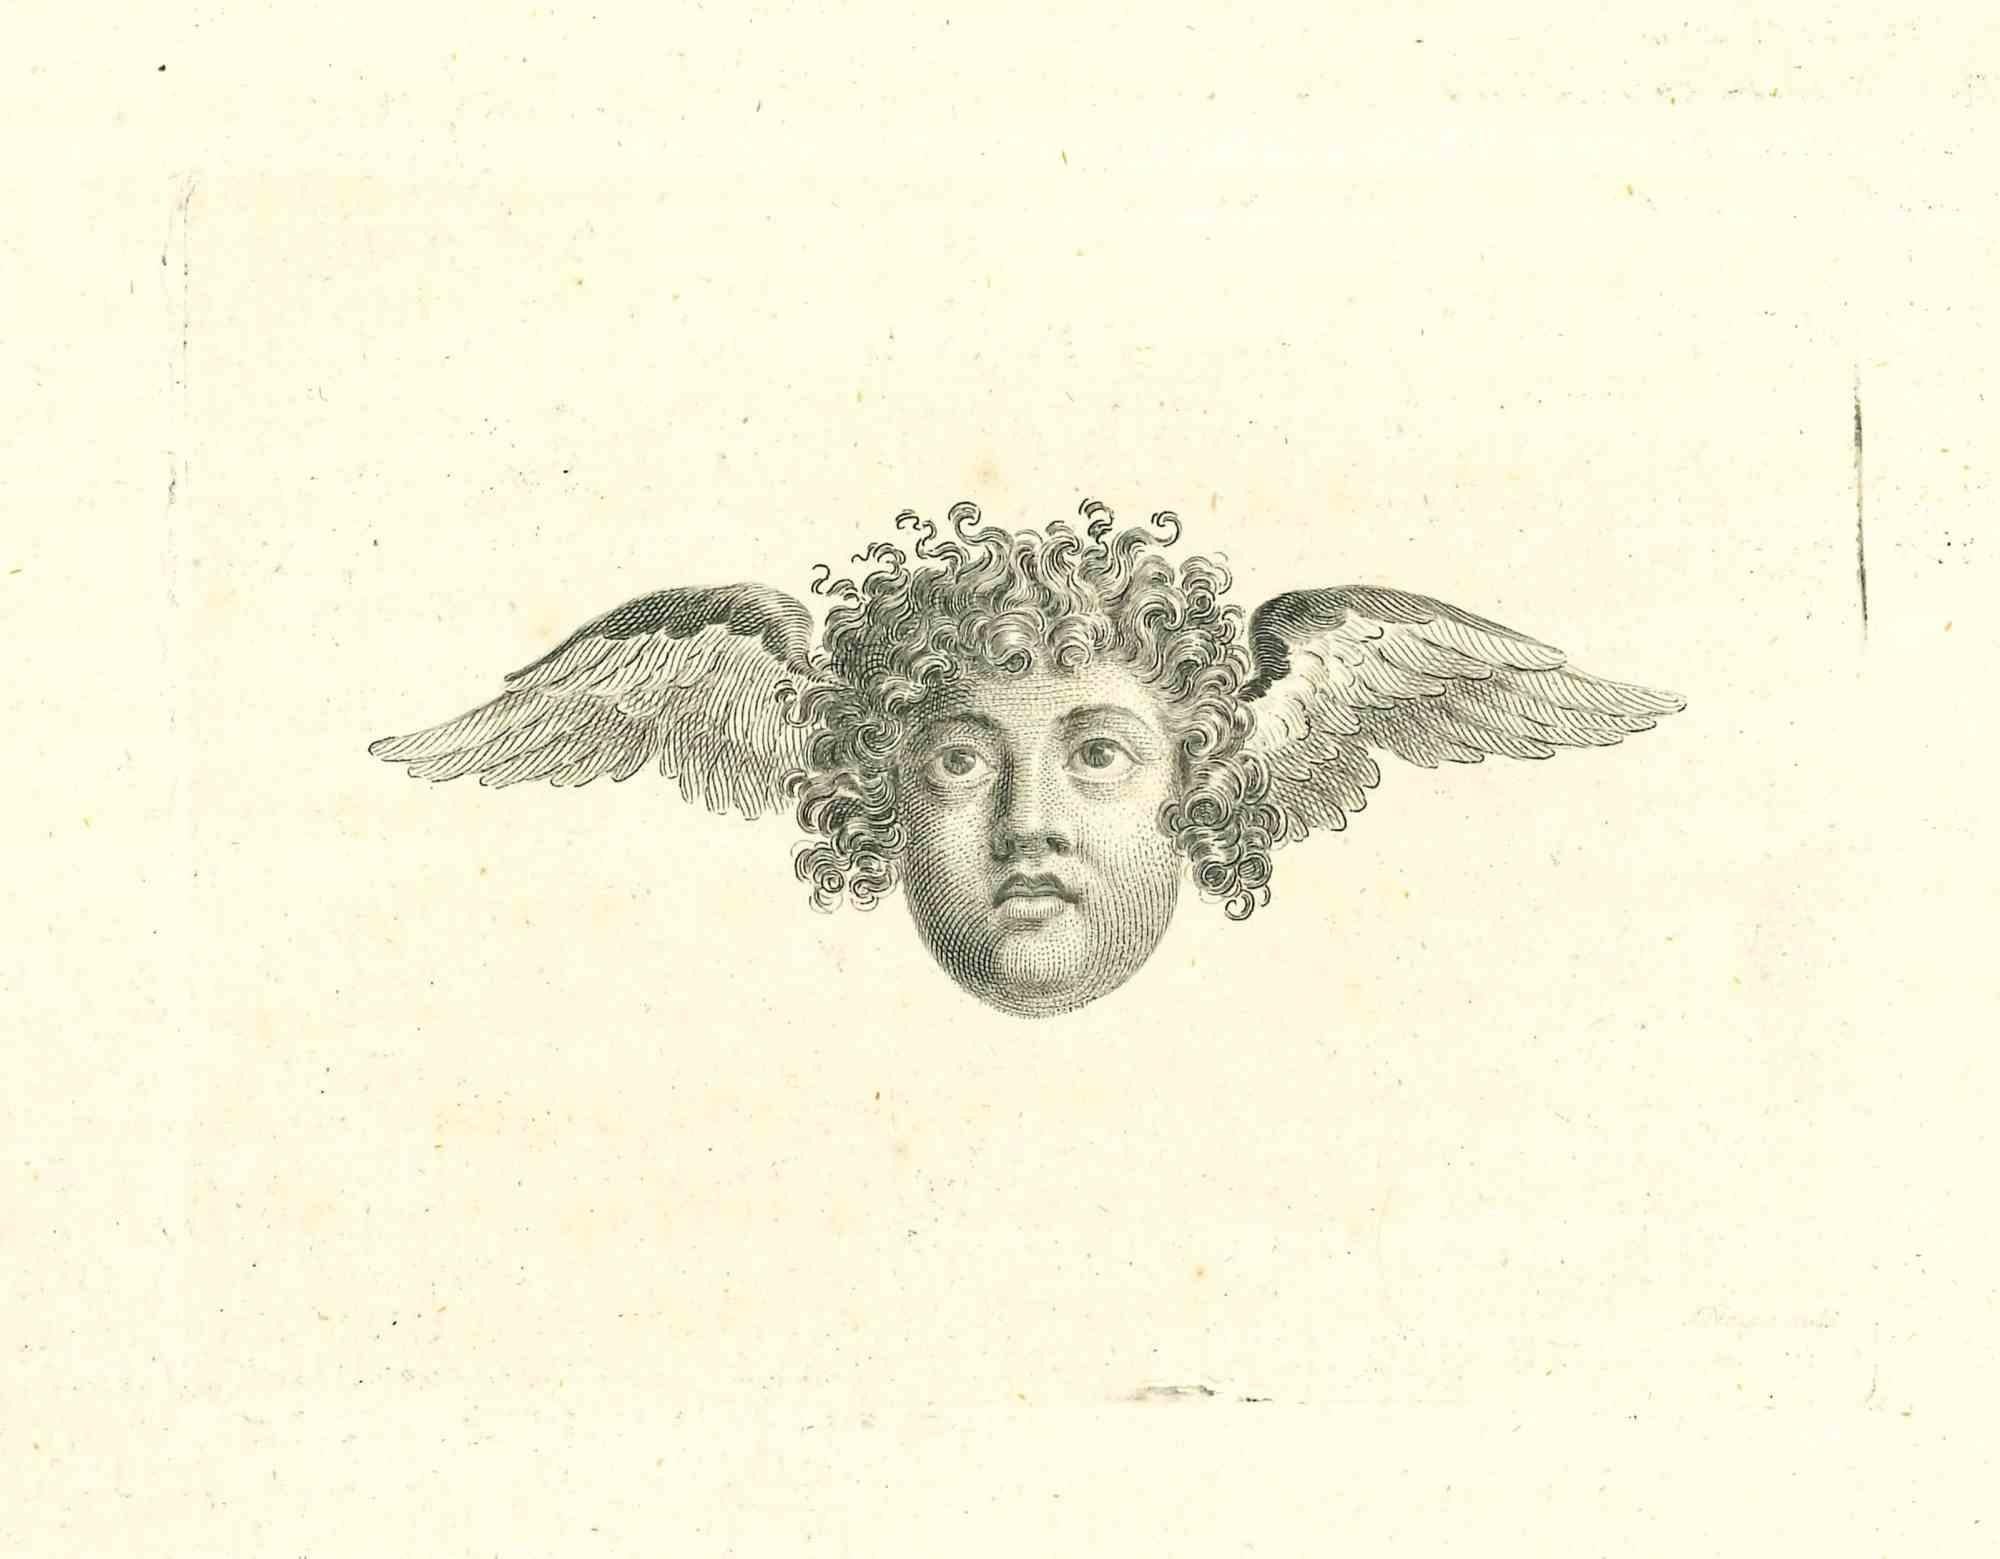 Angel - Original Etching by Thomas Holloway - 1810